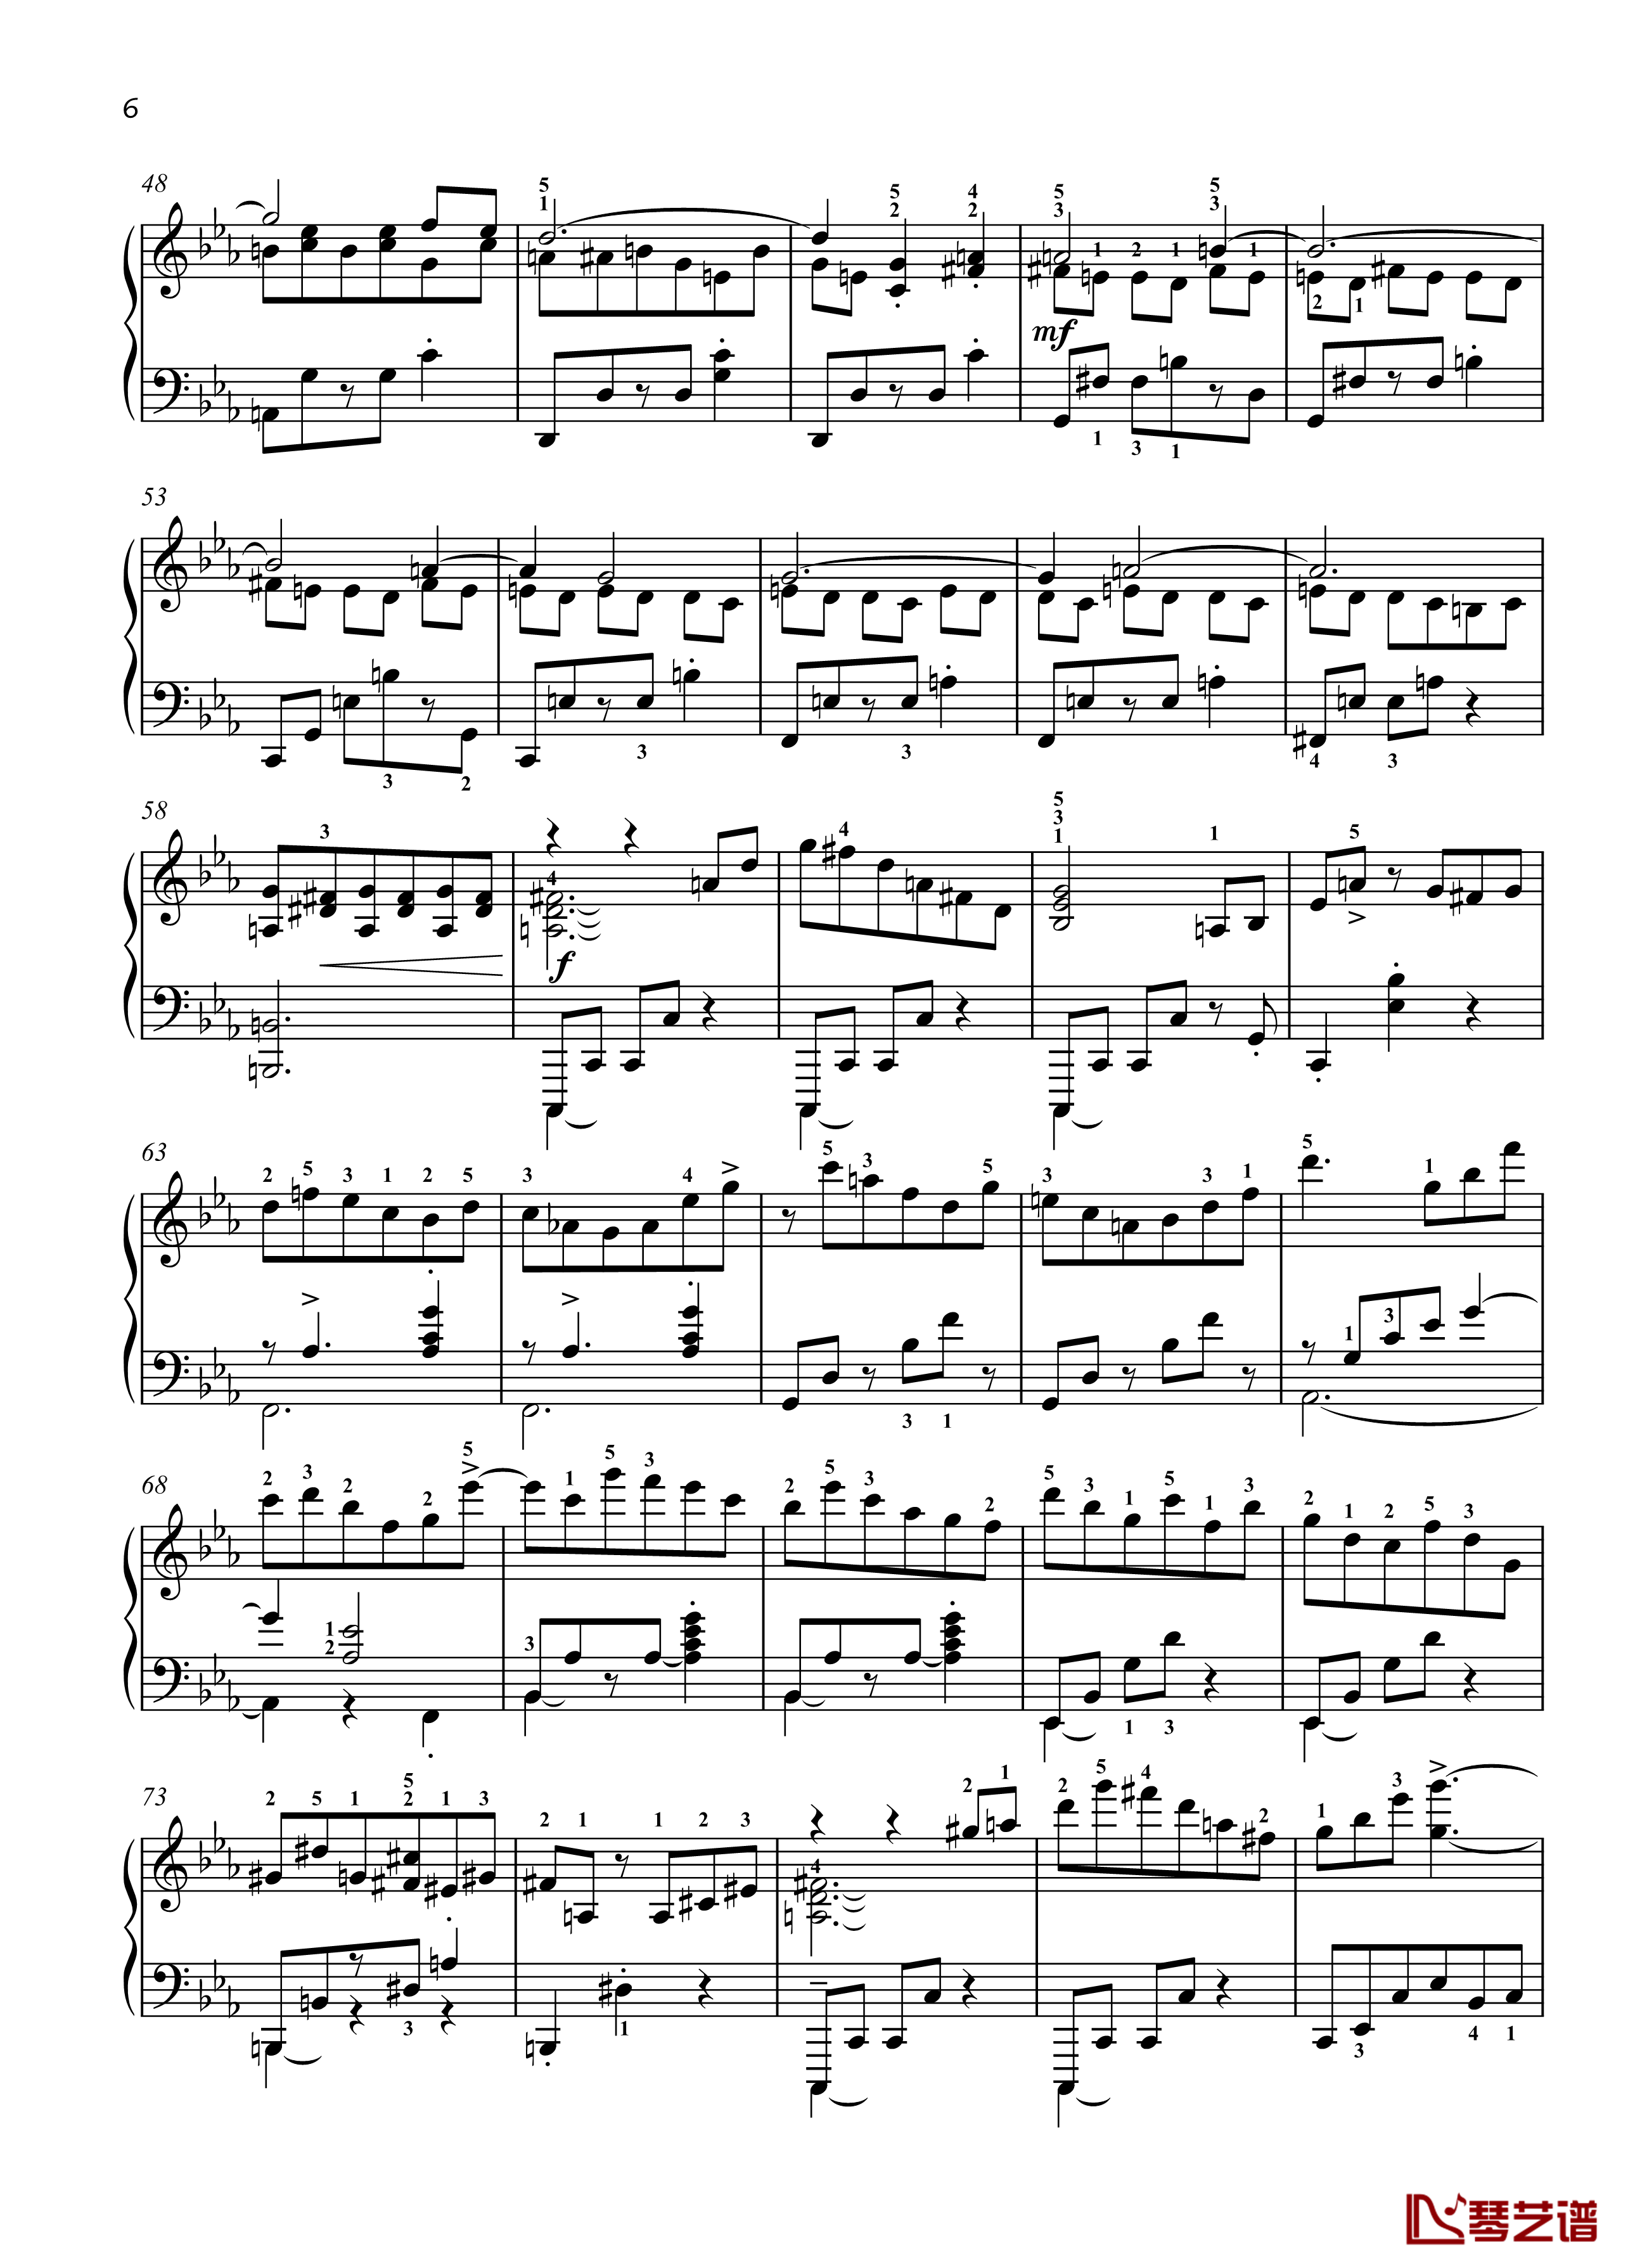 No. 2. Dream. Moderato钢琴谱-带指法- 八首音乐会练习曲 Eight Concert ?tudes Op 40 -爵士-尼古拉·凯帕斯汀6